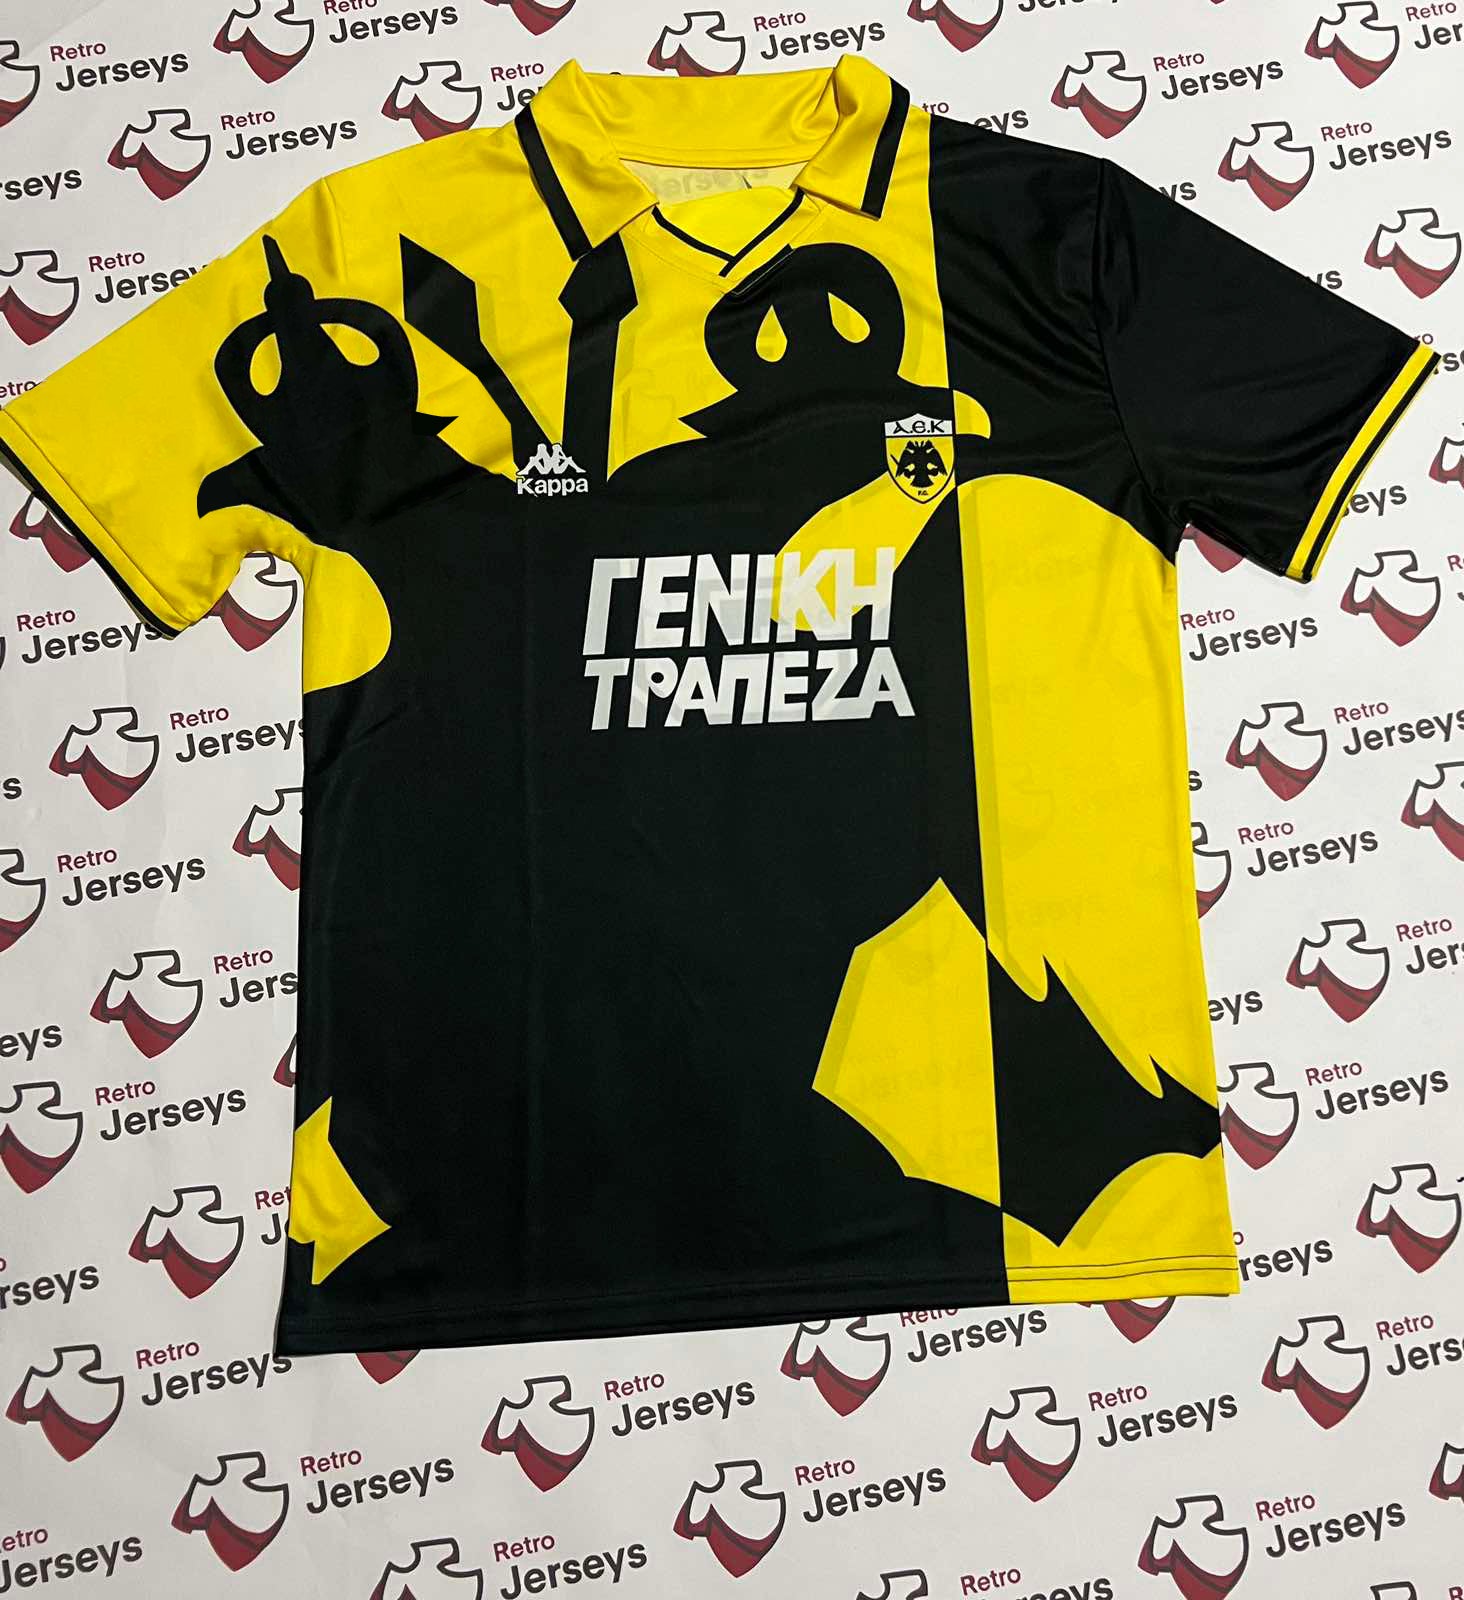 AEK Athens Shirt 1996-1997 Home - Retro Jerseys, φανέλα αεκ - Retro Jerseys